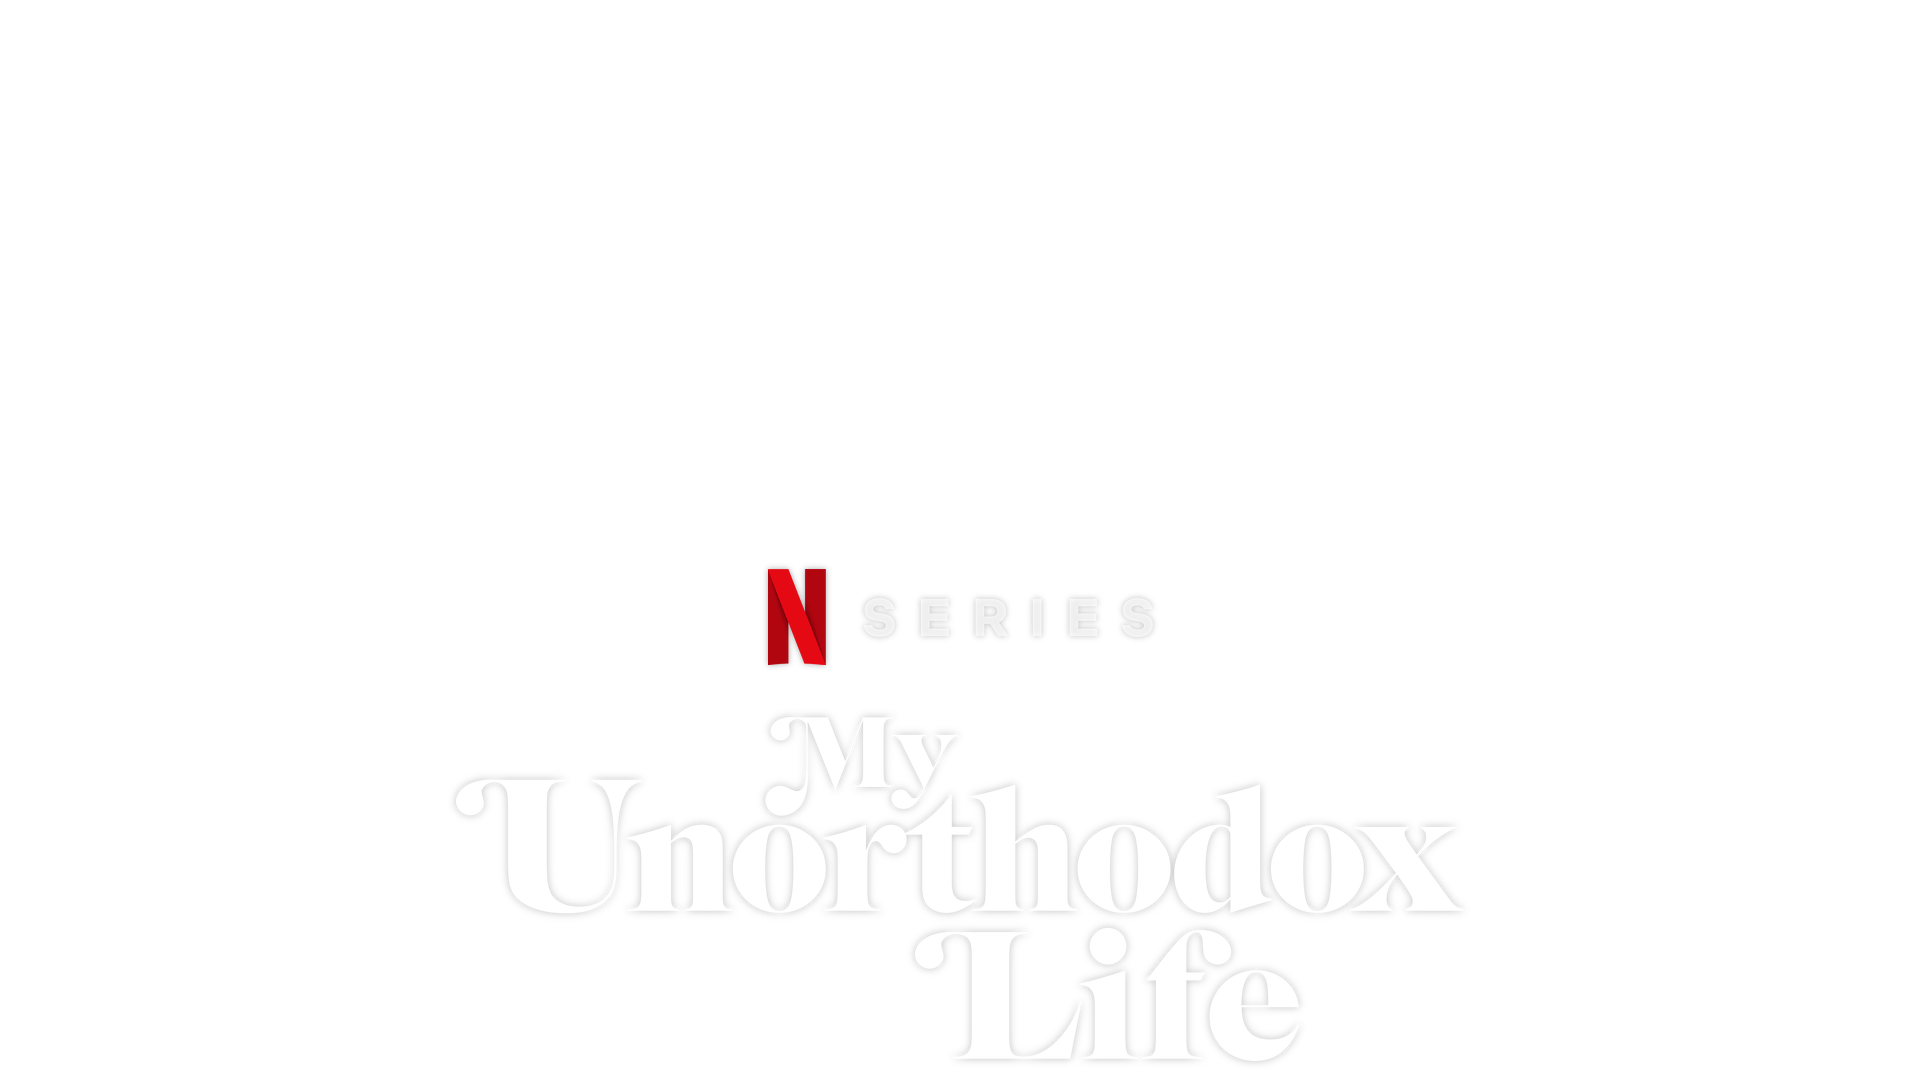 Star of Netflix hit 'My Unorthodox Life' launches high-tech